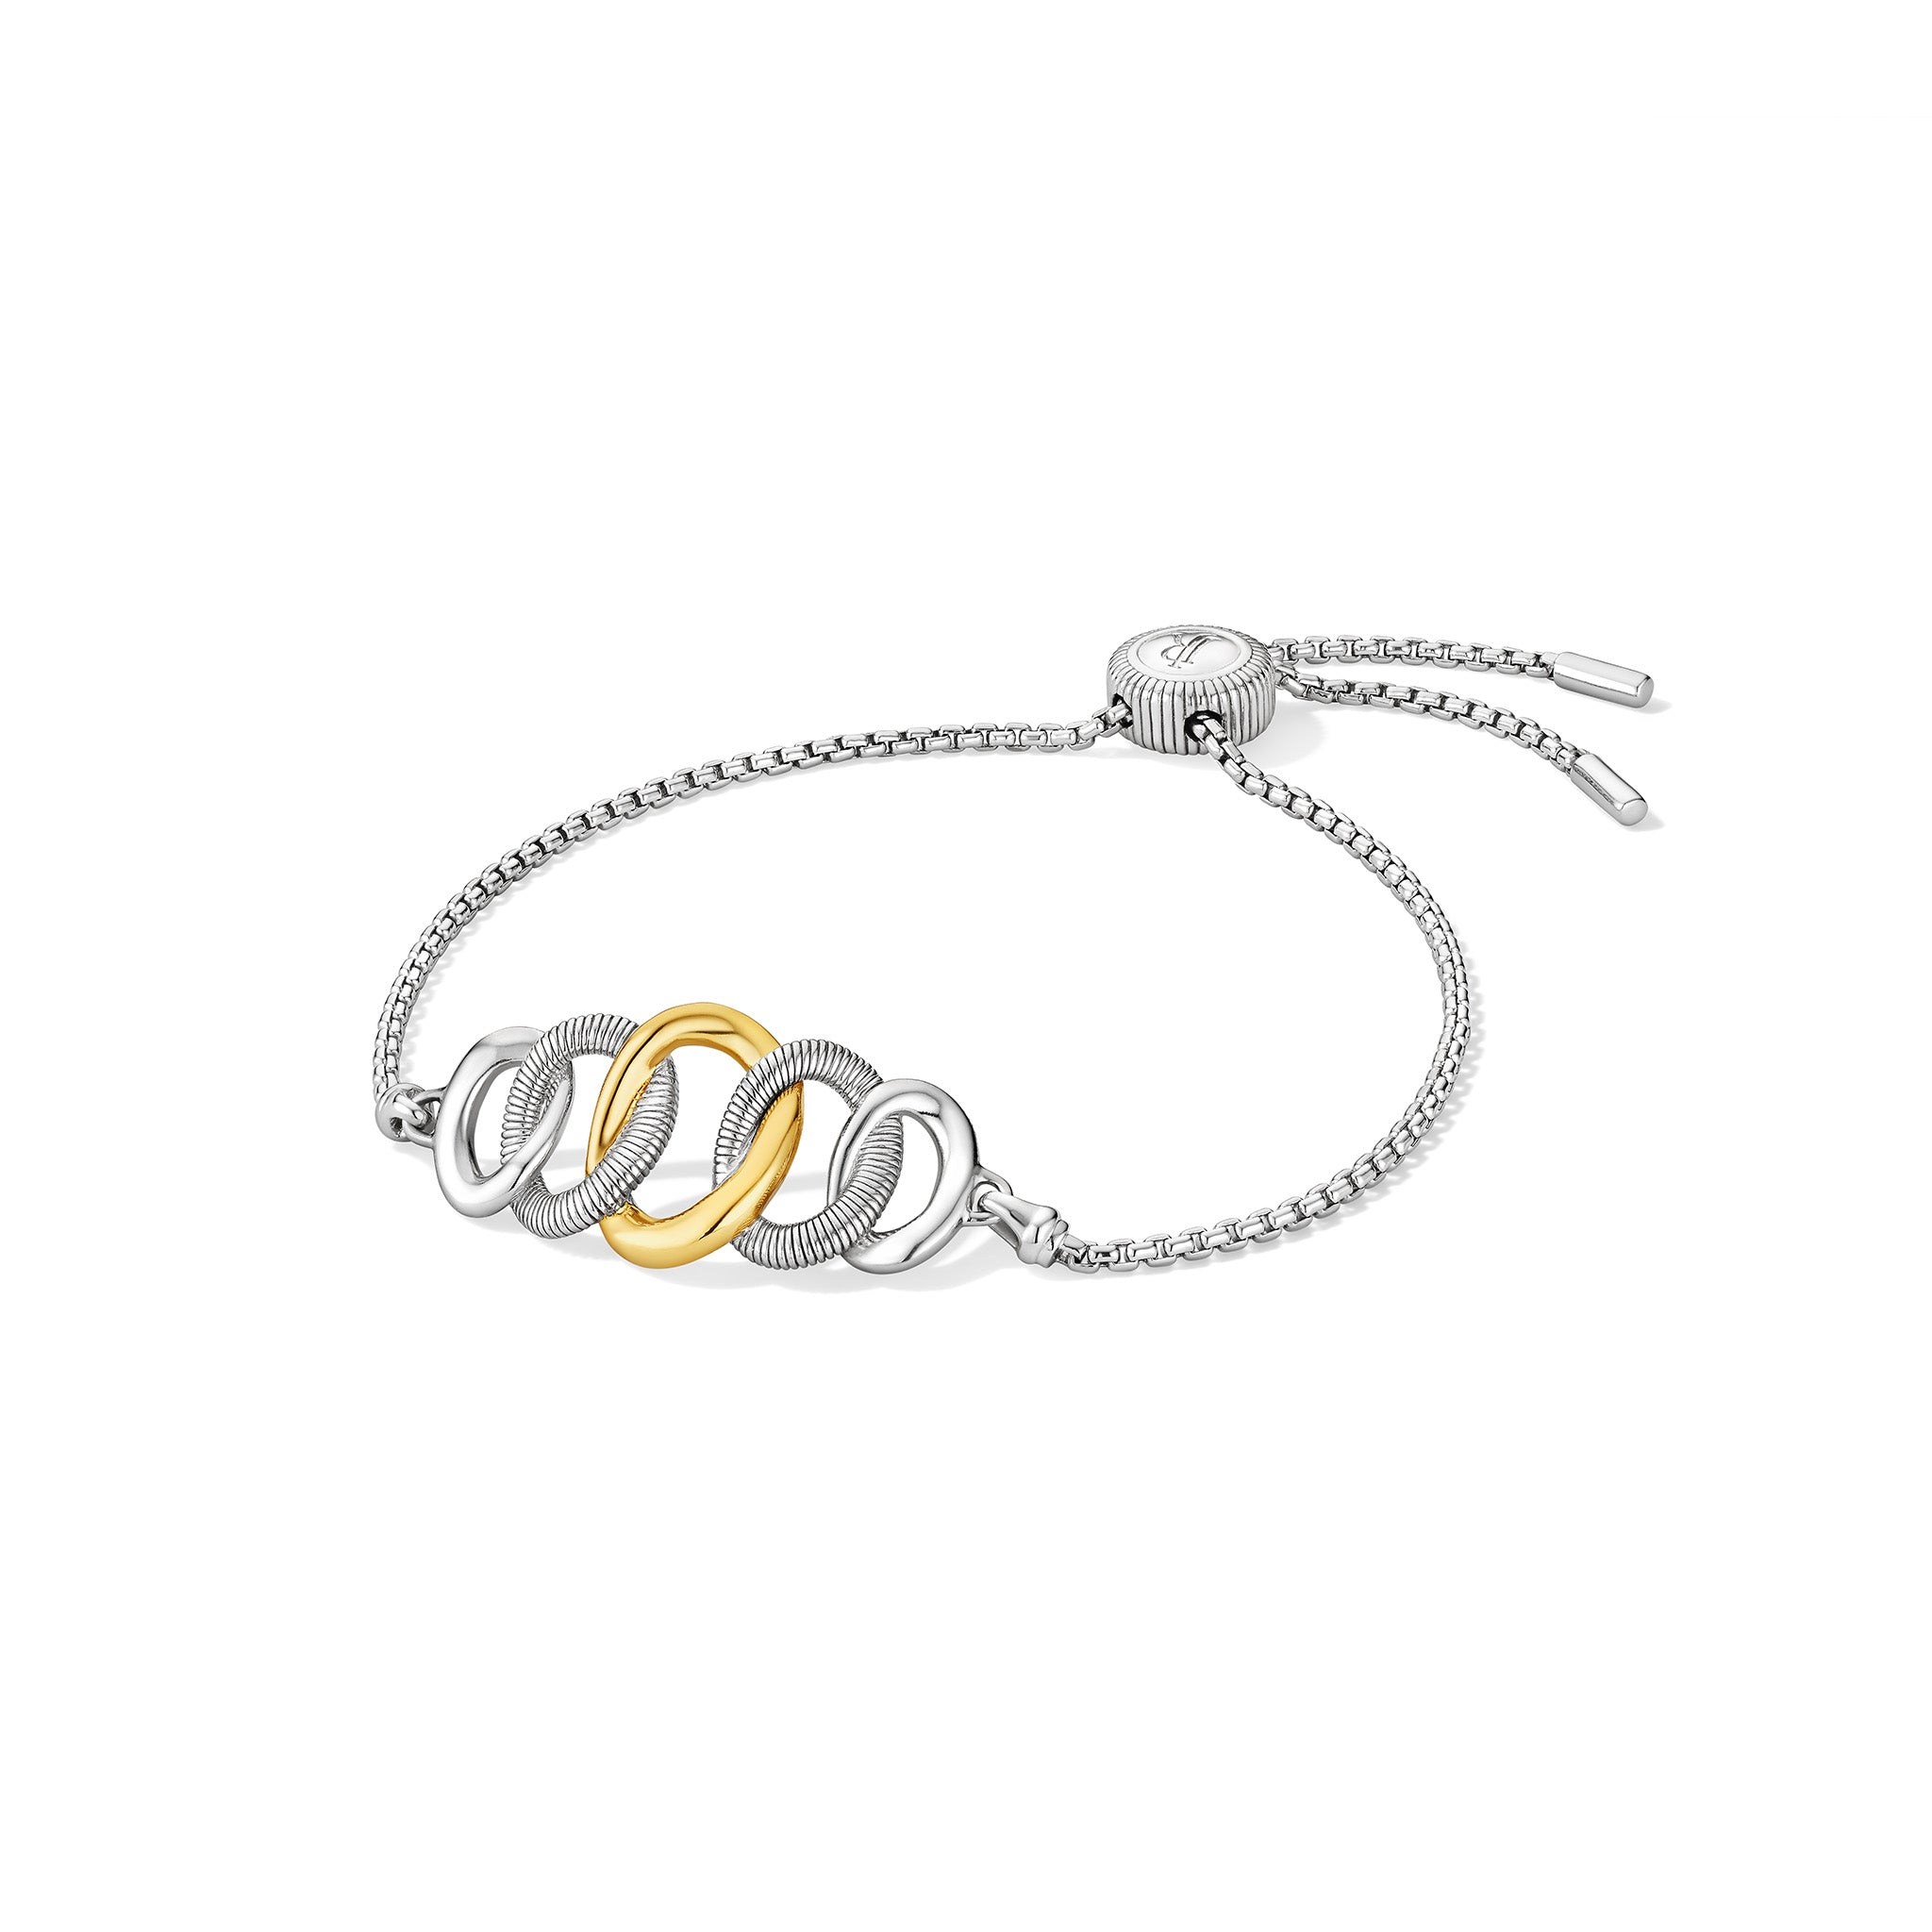 Eternity Interlocking Multi Link Friendship Bracelet With 18K Gold